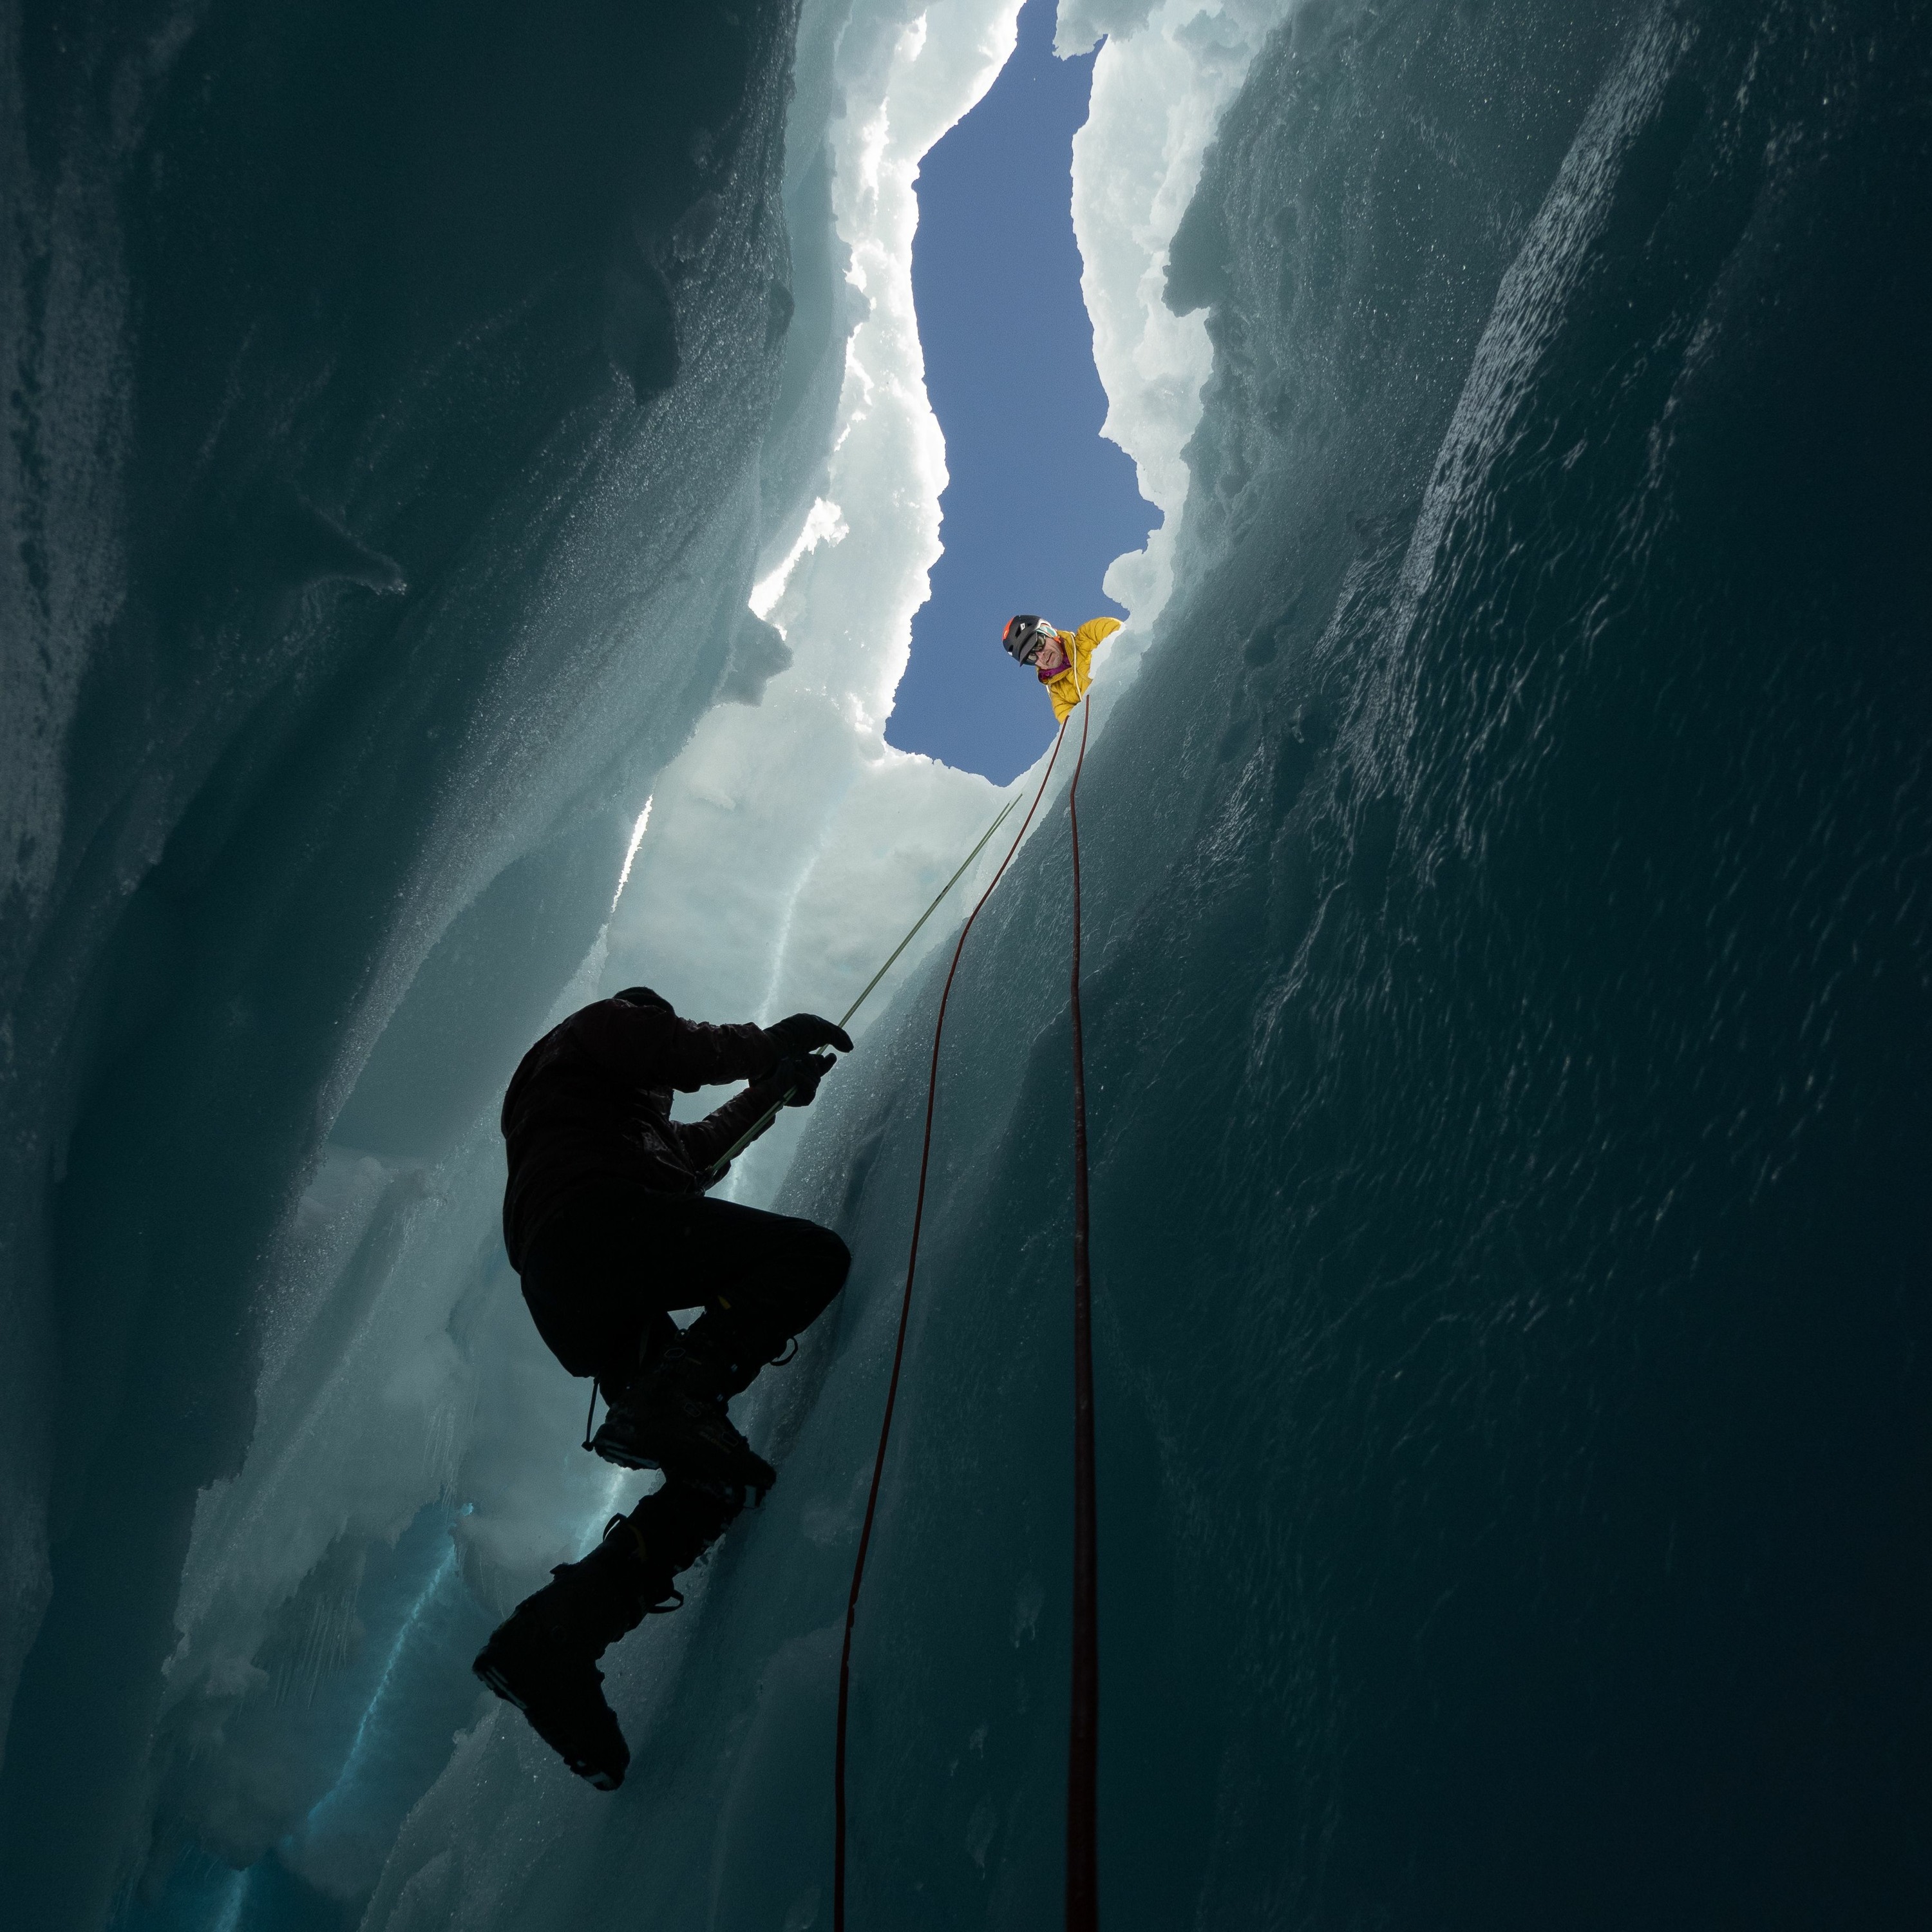 Ep 95 - We Rescued A Skier Who Fell In A Crevasse On Mt Baker - Allen Taylor & Samuel Lien